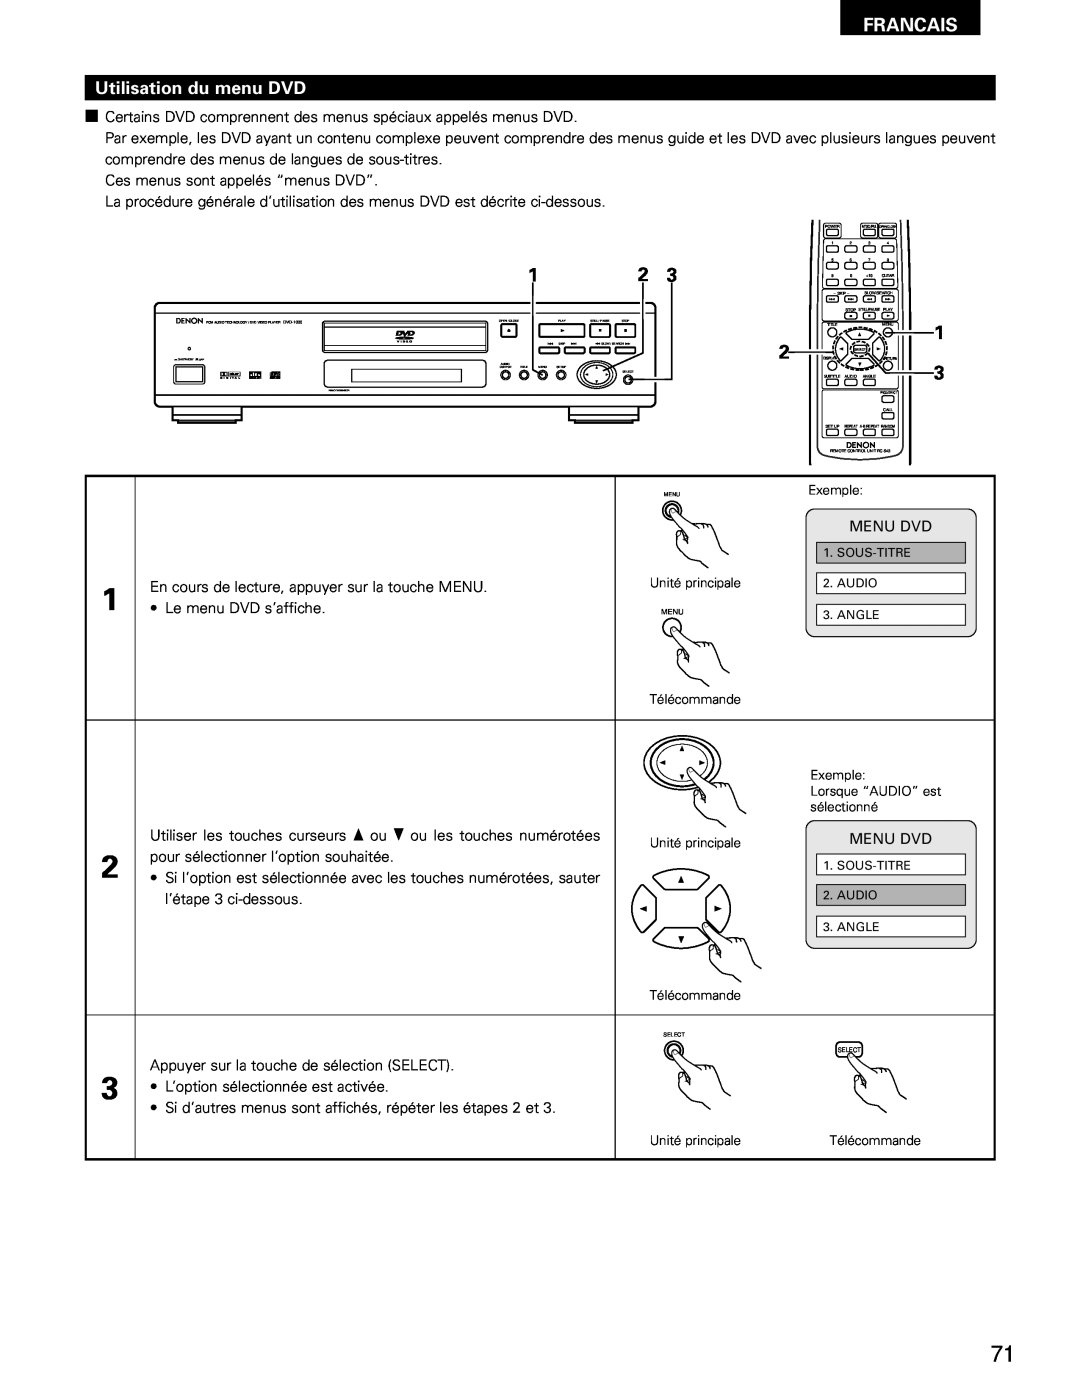 Denon DVD-1000 manual Utilisation du menu DVD, Francais 